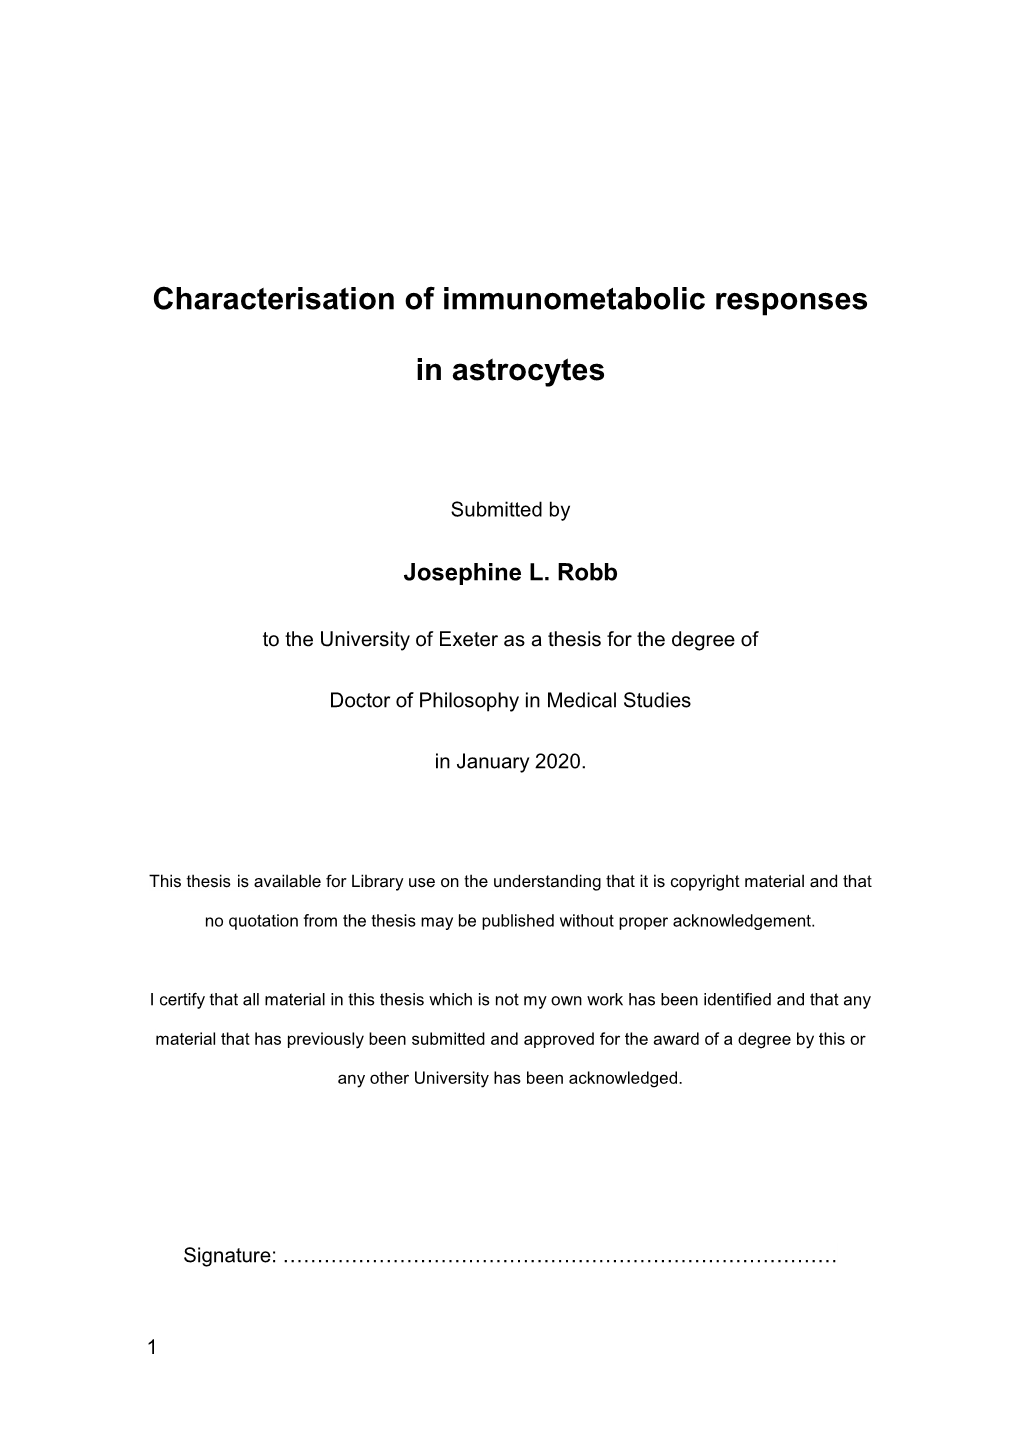 Characterisation of Immunometabolic Responses in Astrocytes